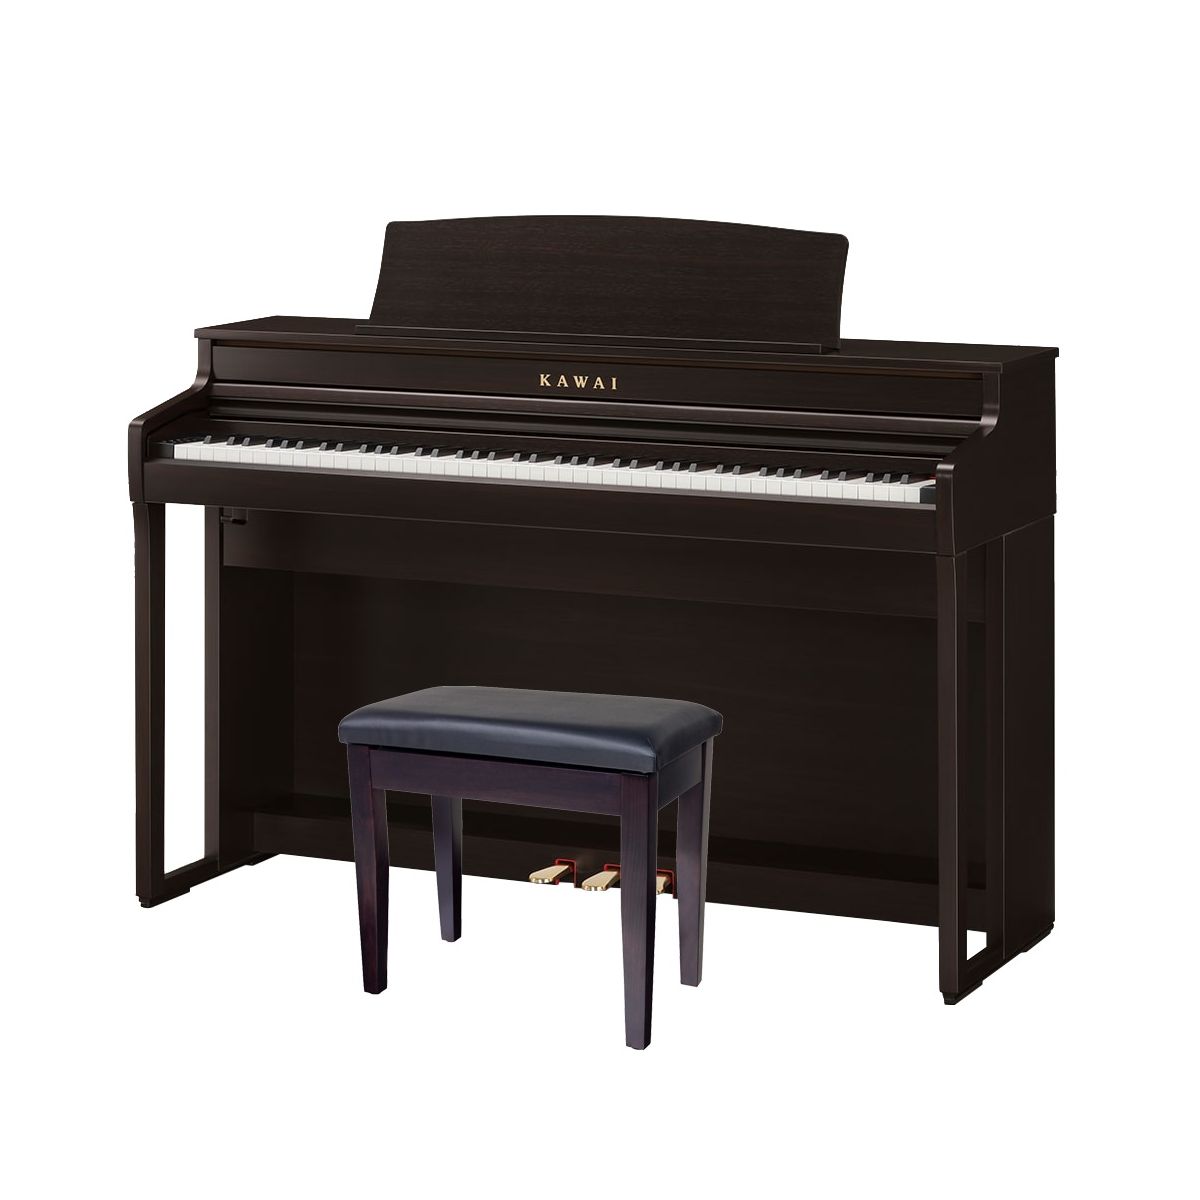 цифровые пианино kawai ca401 b банкетка в комплекте Цифровые пианино Kawai CA401 R (банкетка в комплекте)